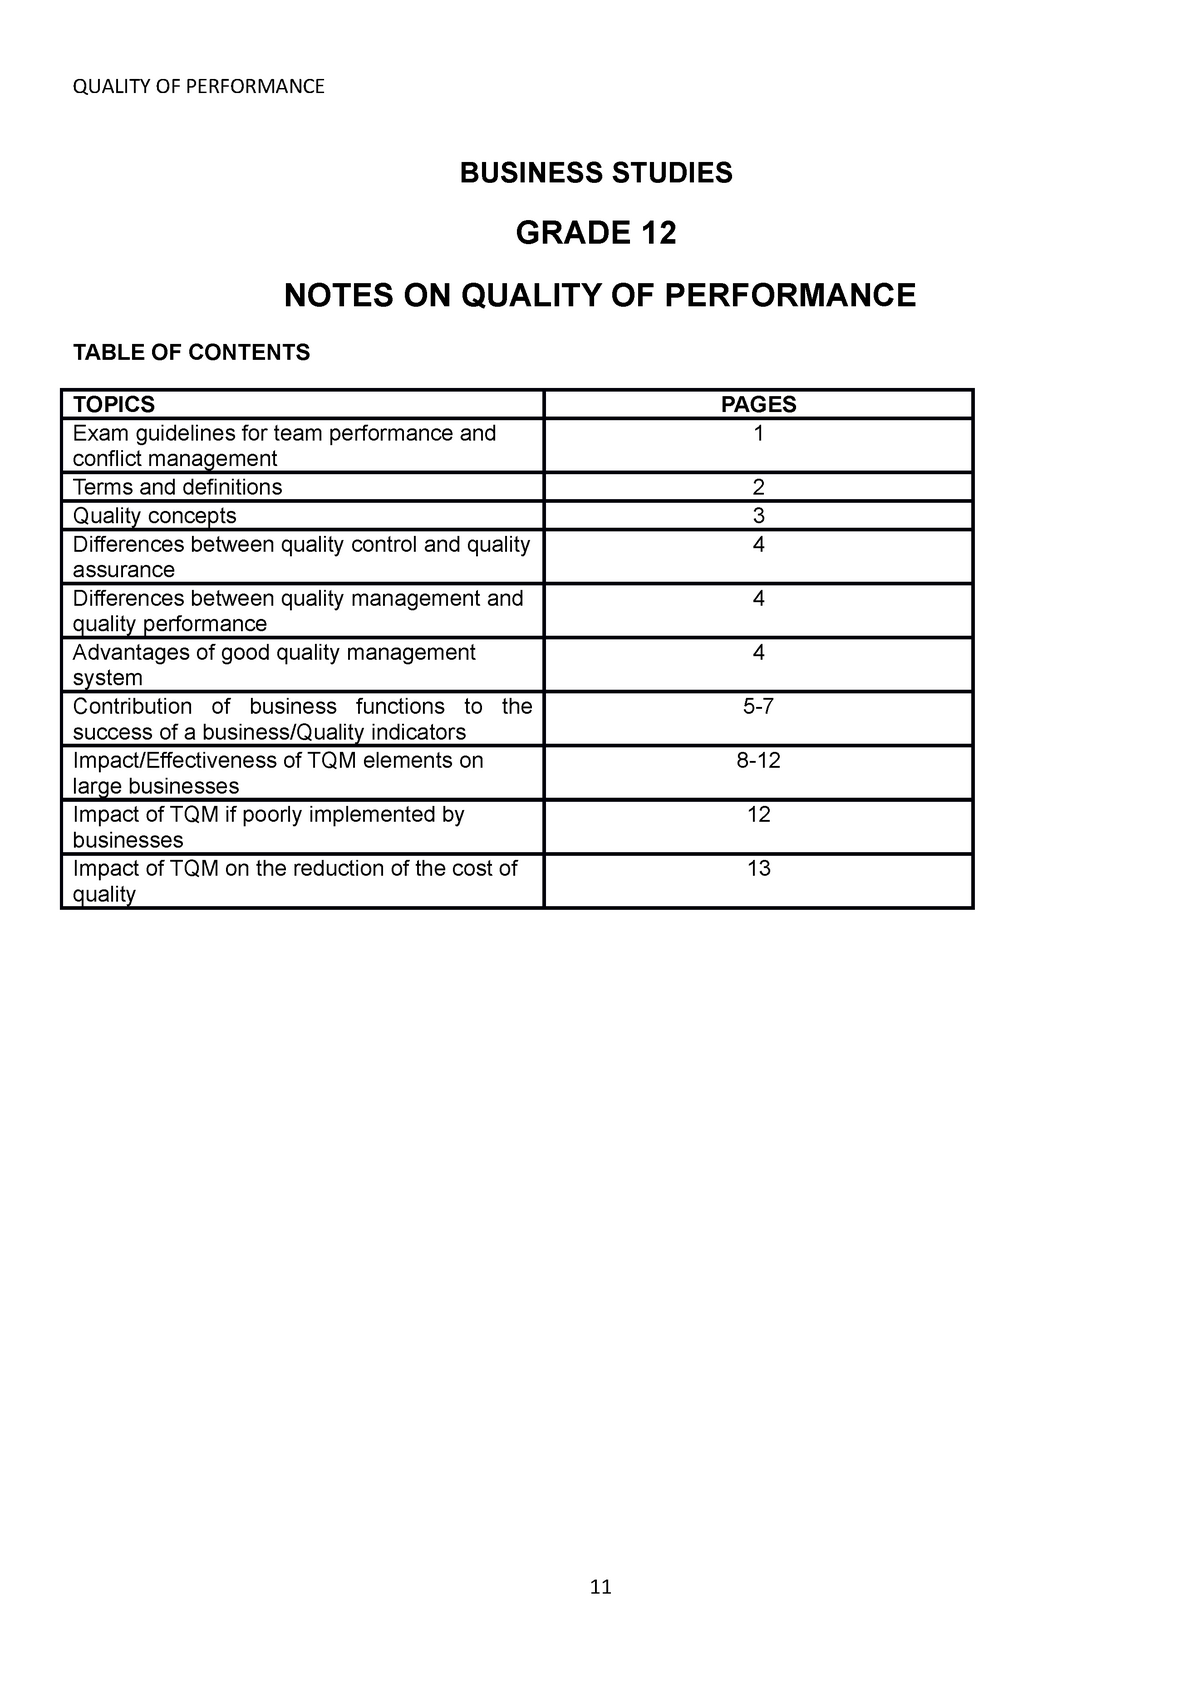 grade 12 business studies quality performance essay